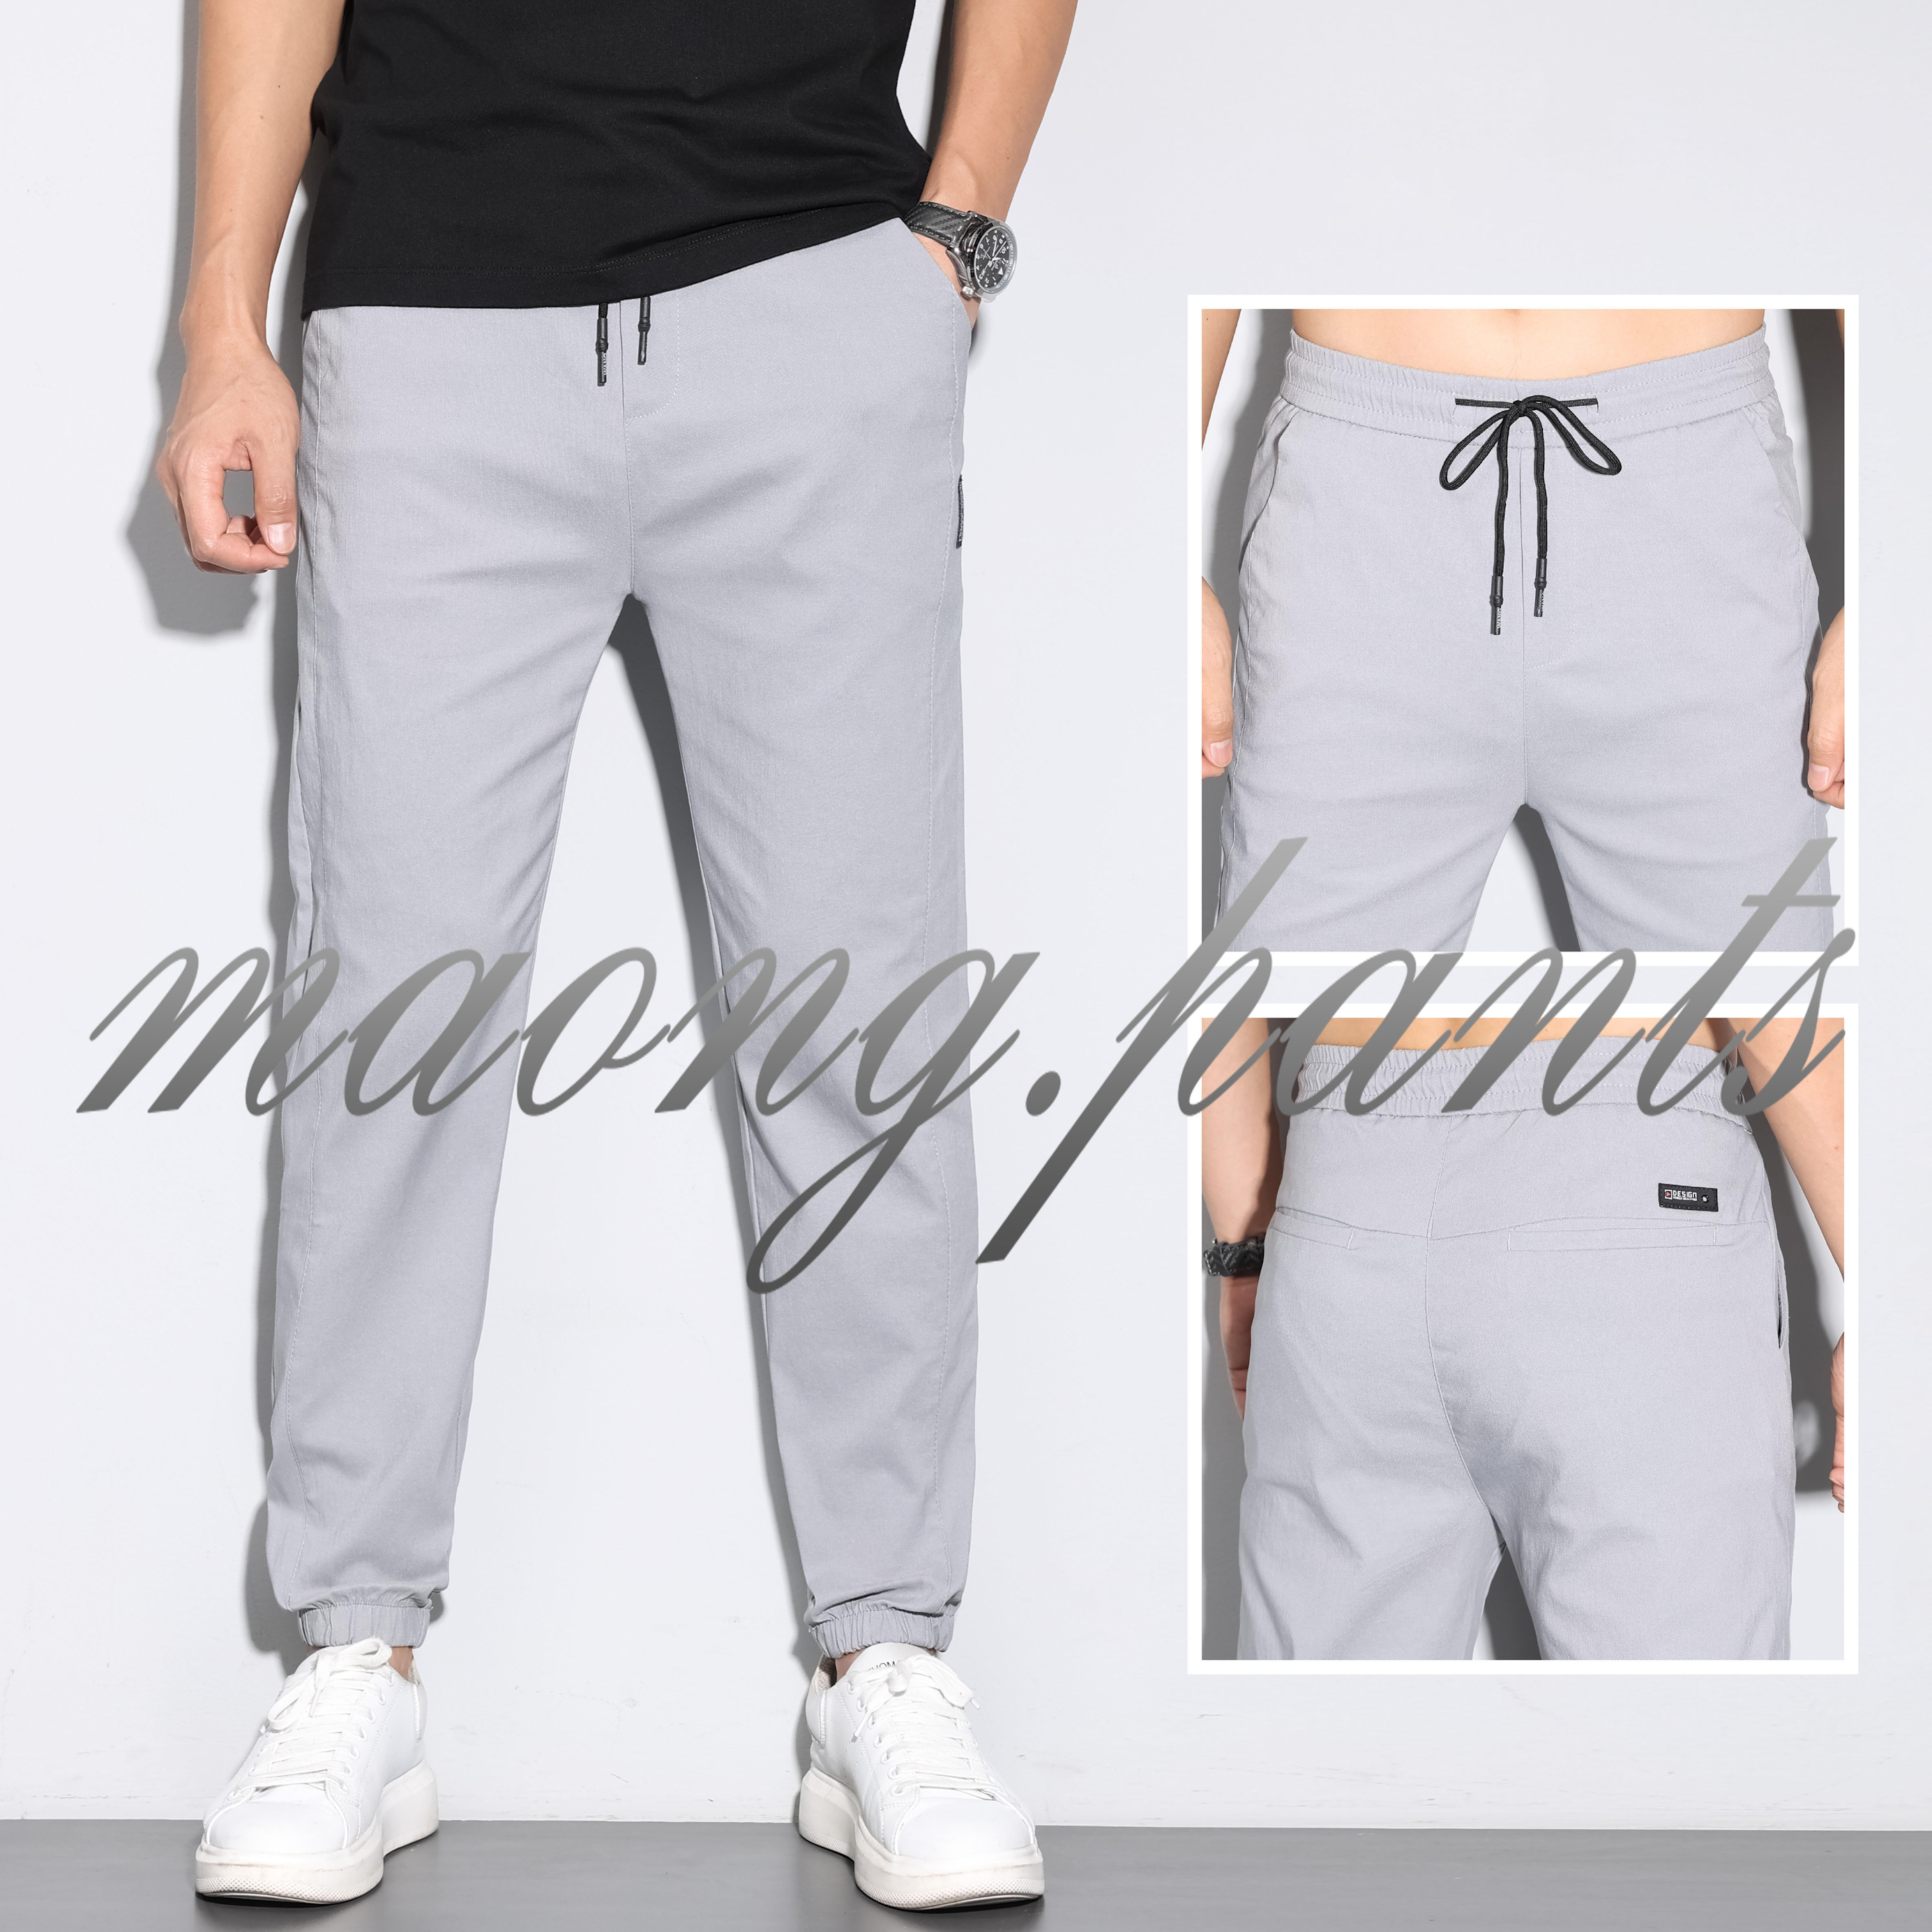 Elegant Light Grey Pants for a Stylish Look